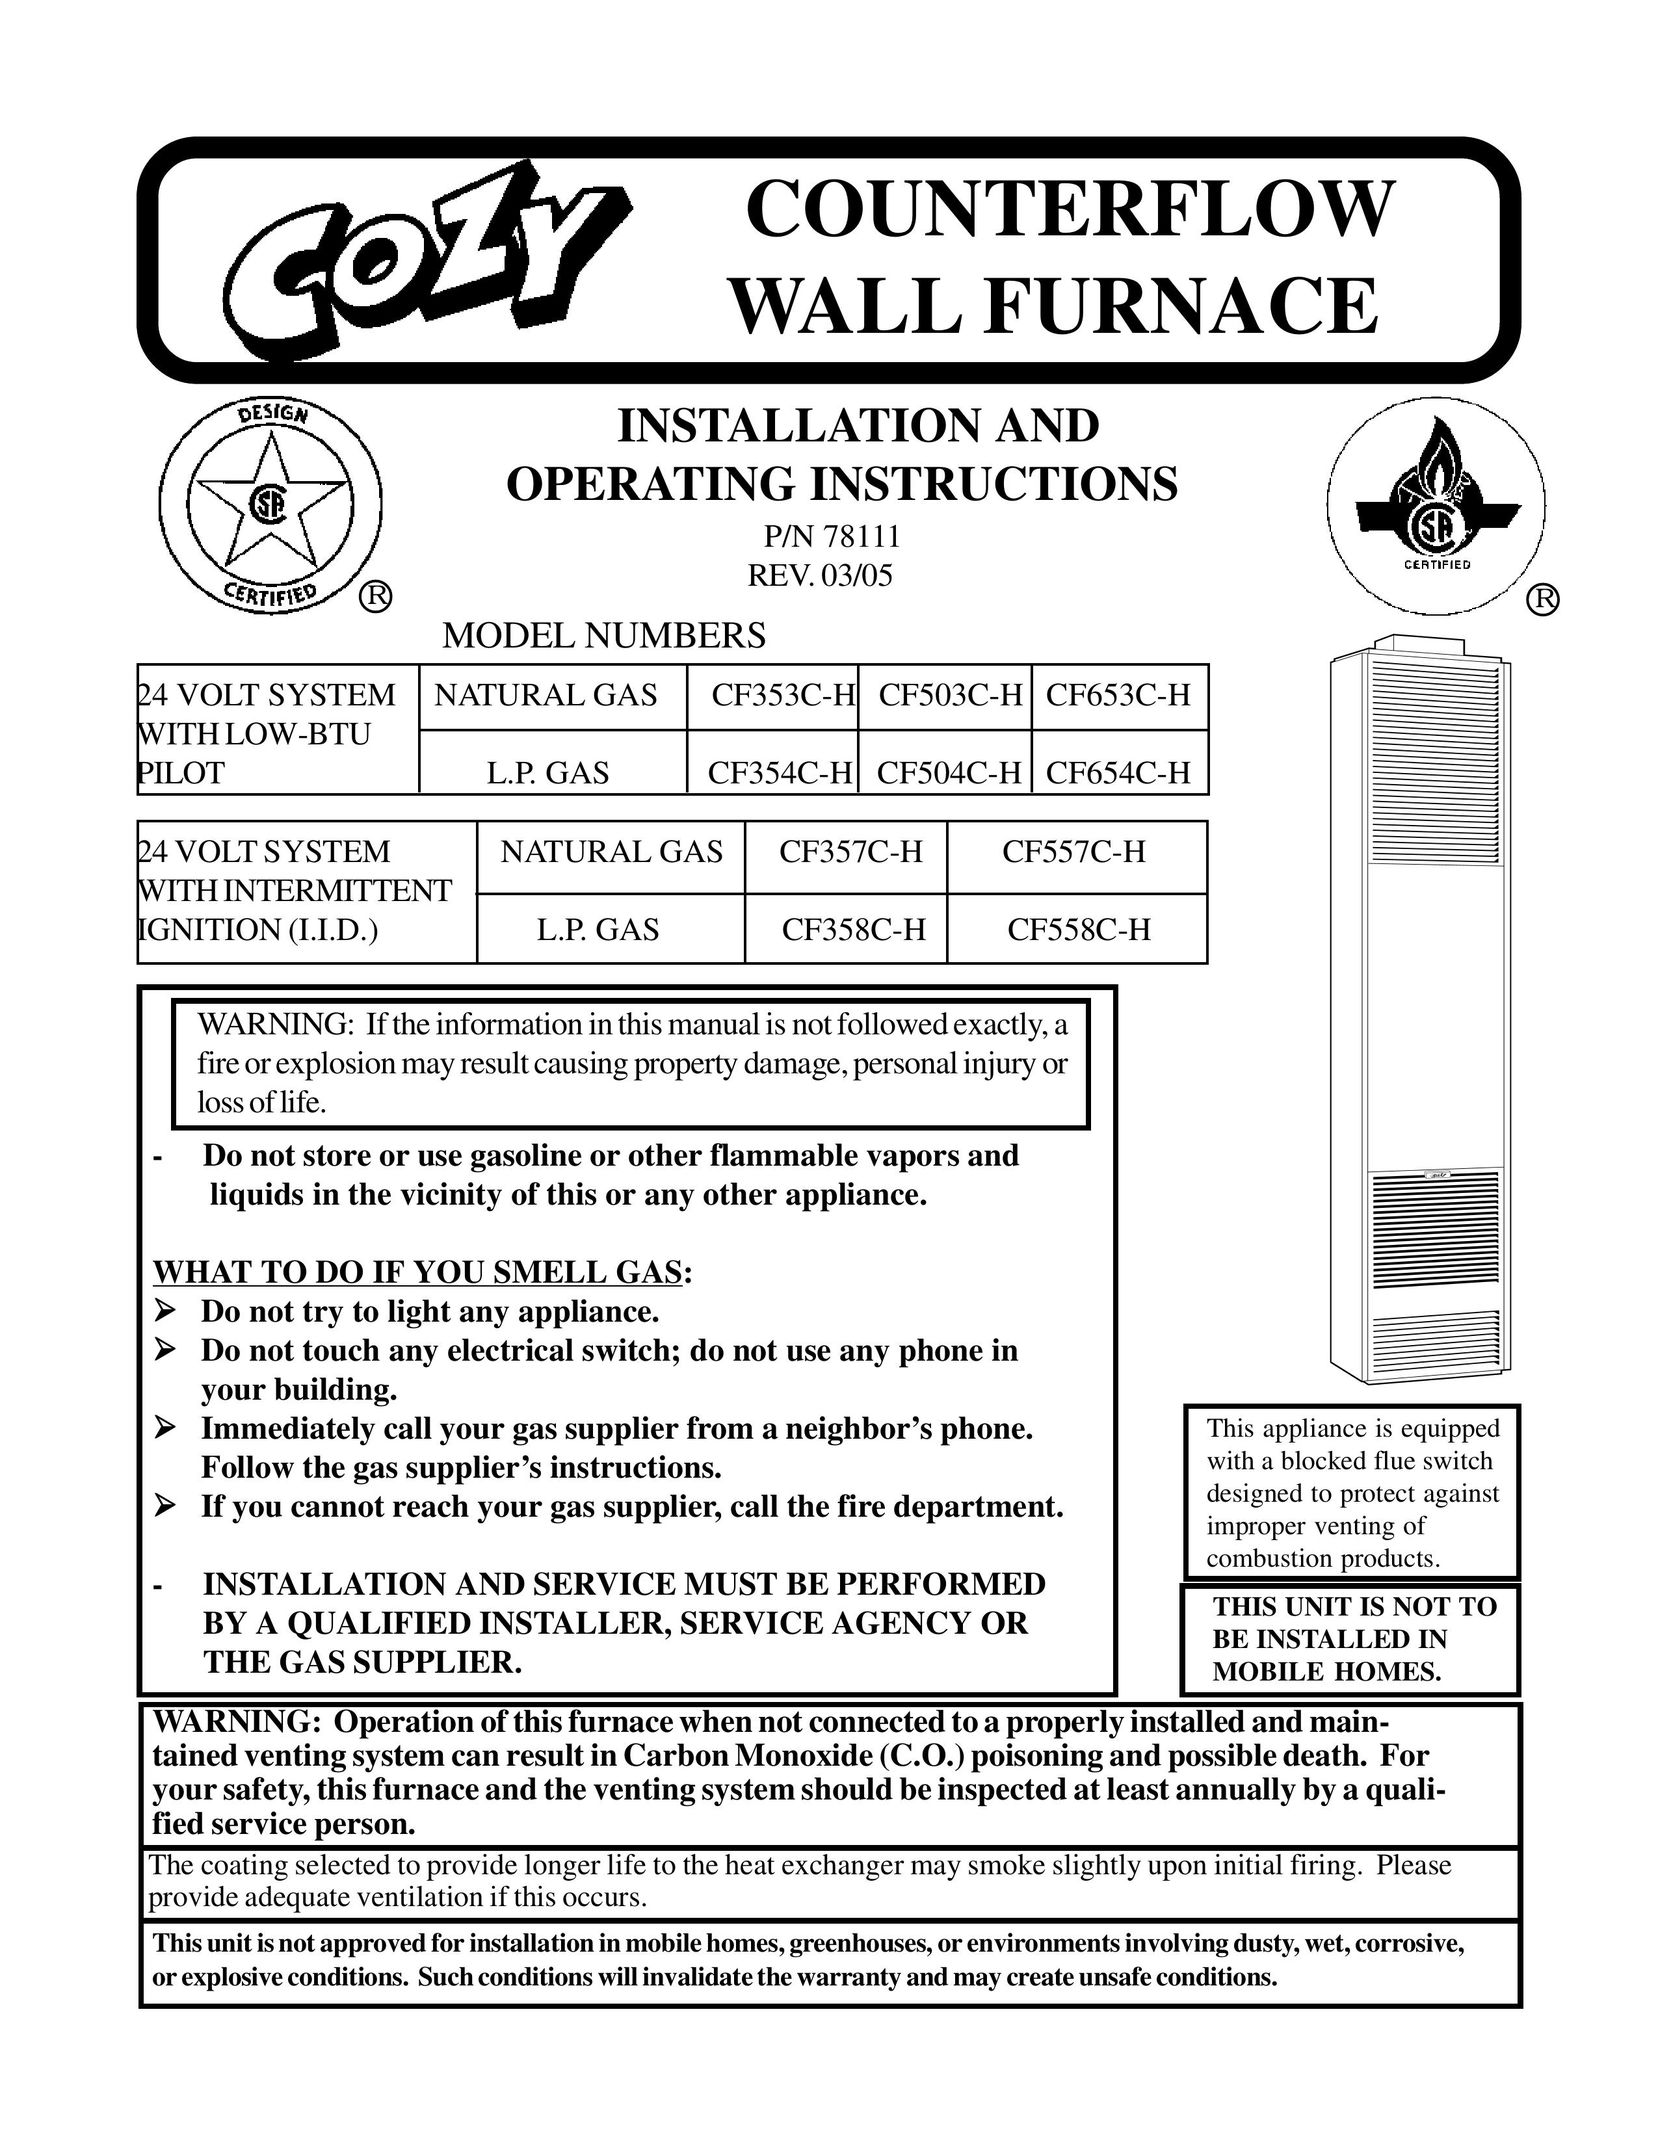 Louisville Tin and Stove CF354C-H Furnace User Manual